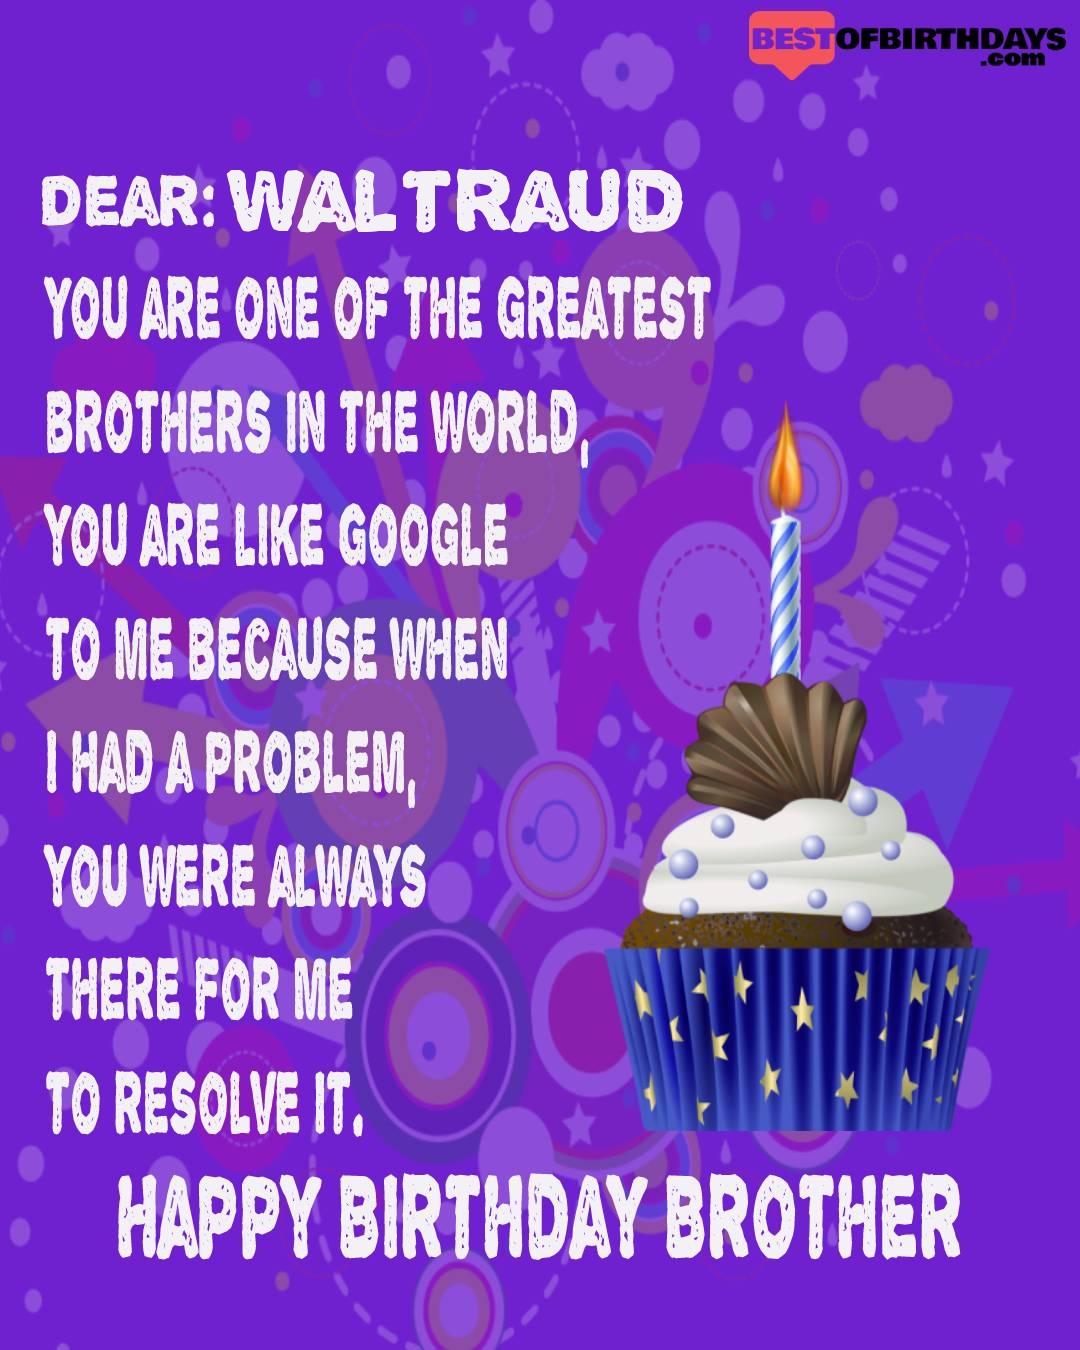 Happy birthday waltraud bhai brother bro